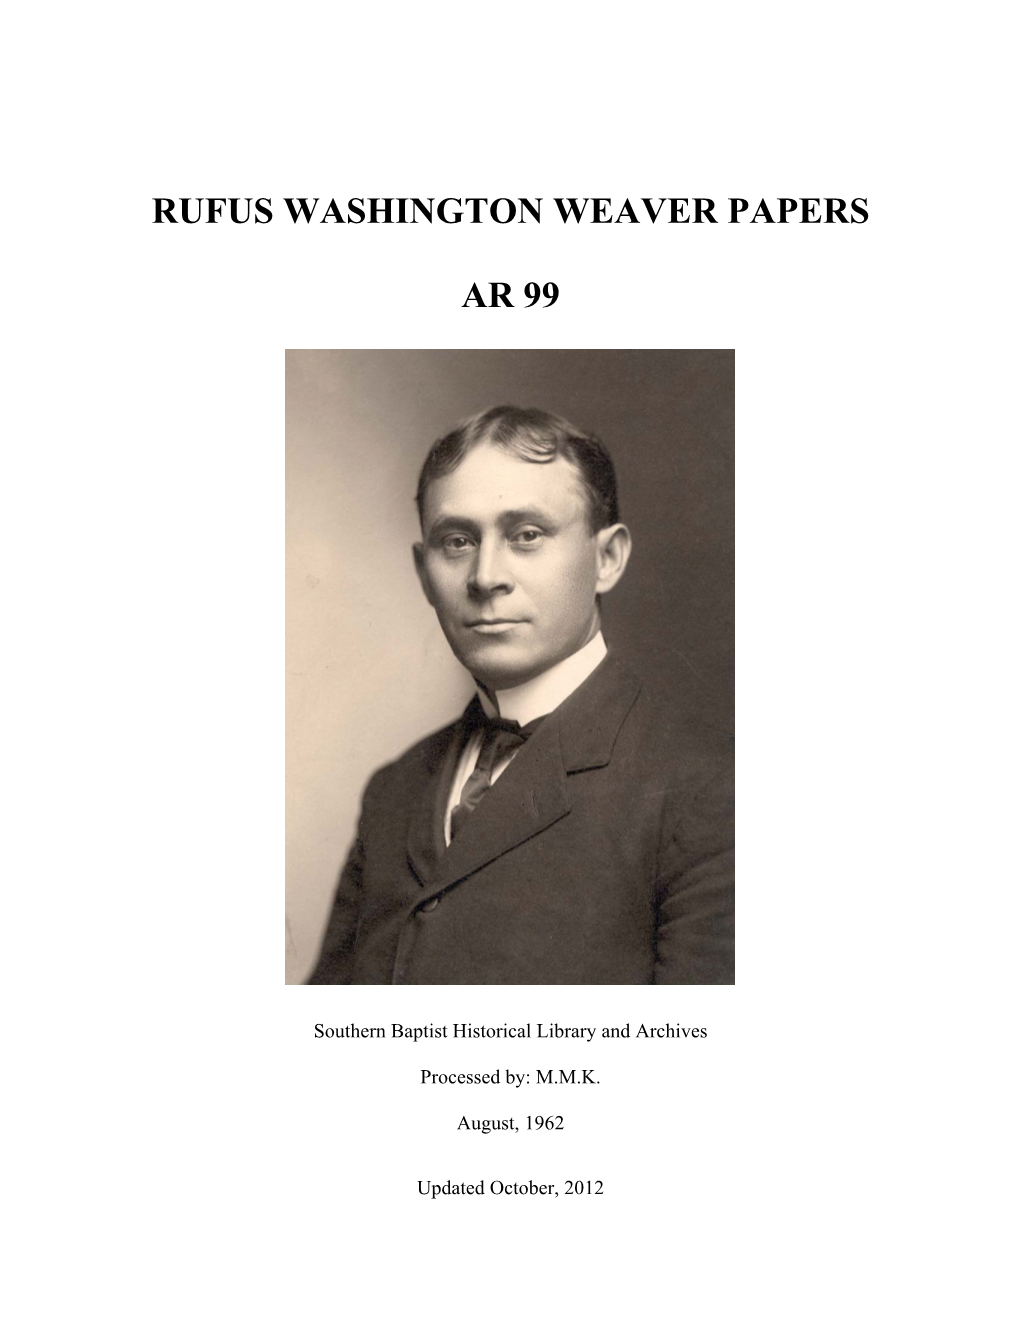 Rufus Washington Weaver Papers